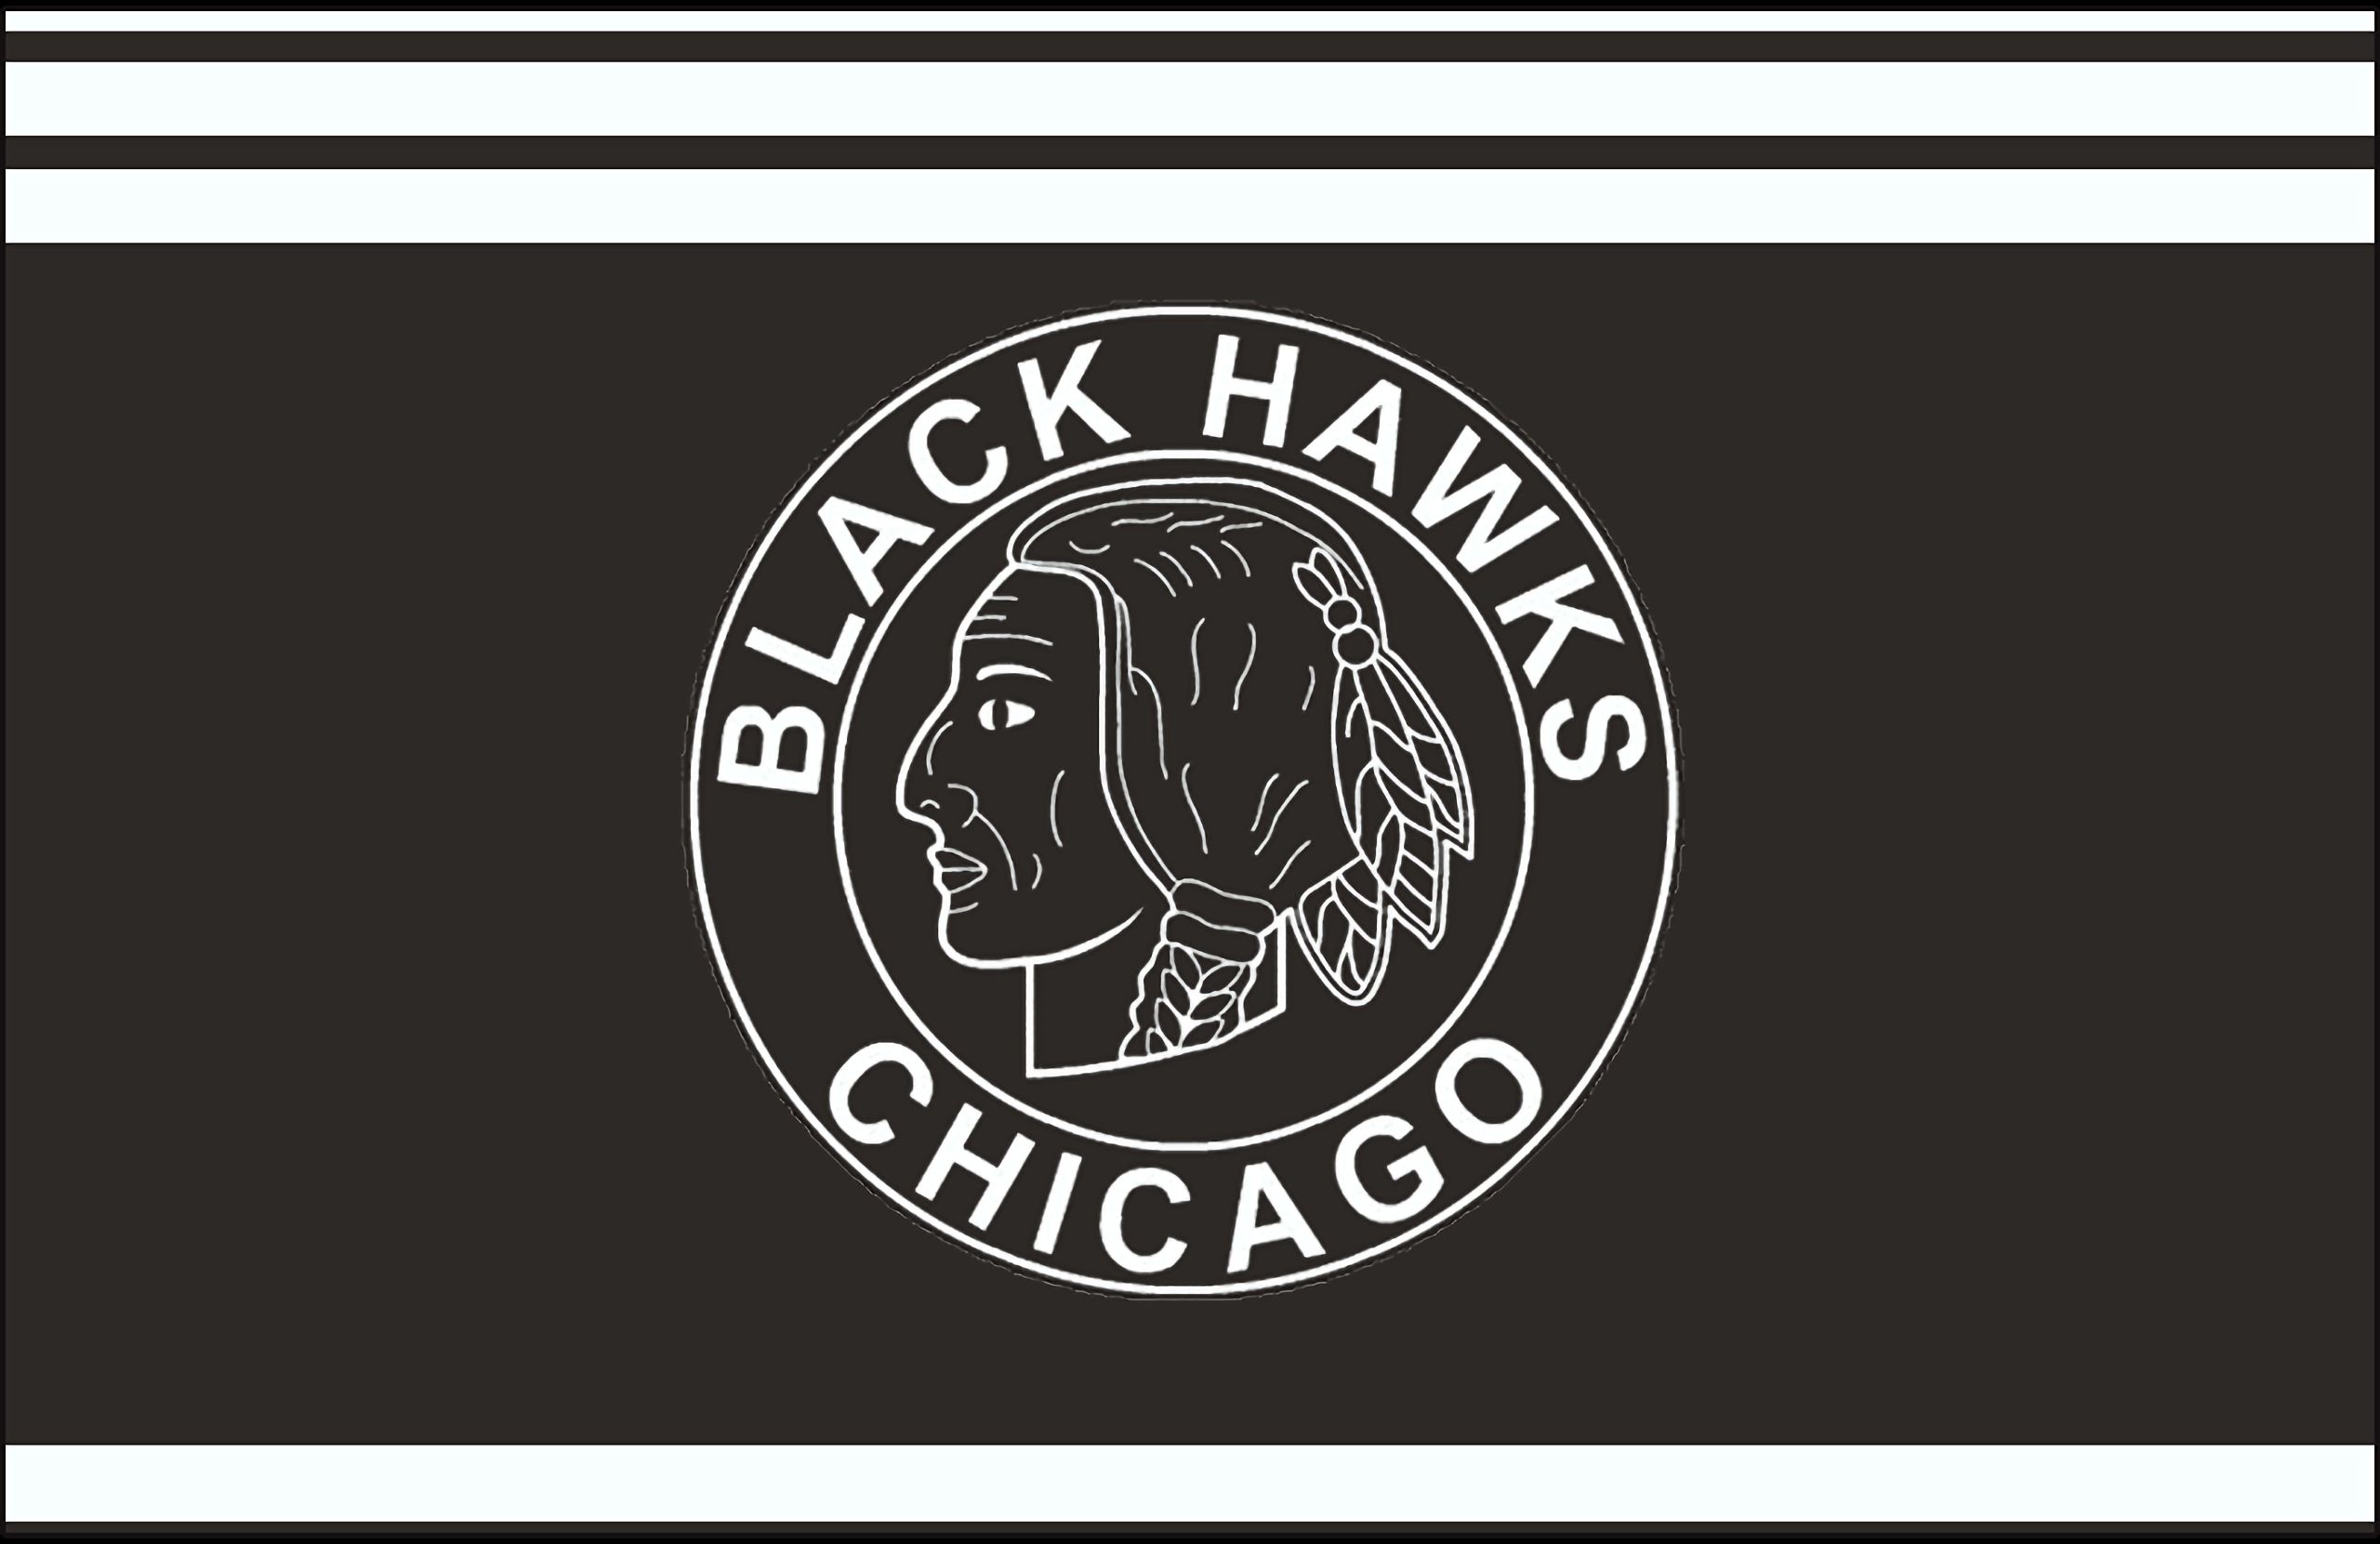  Chicago Blackhawks HQ Background Images